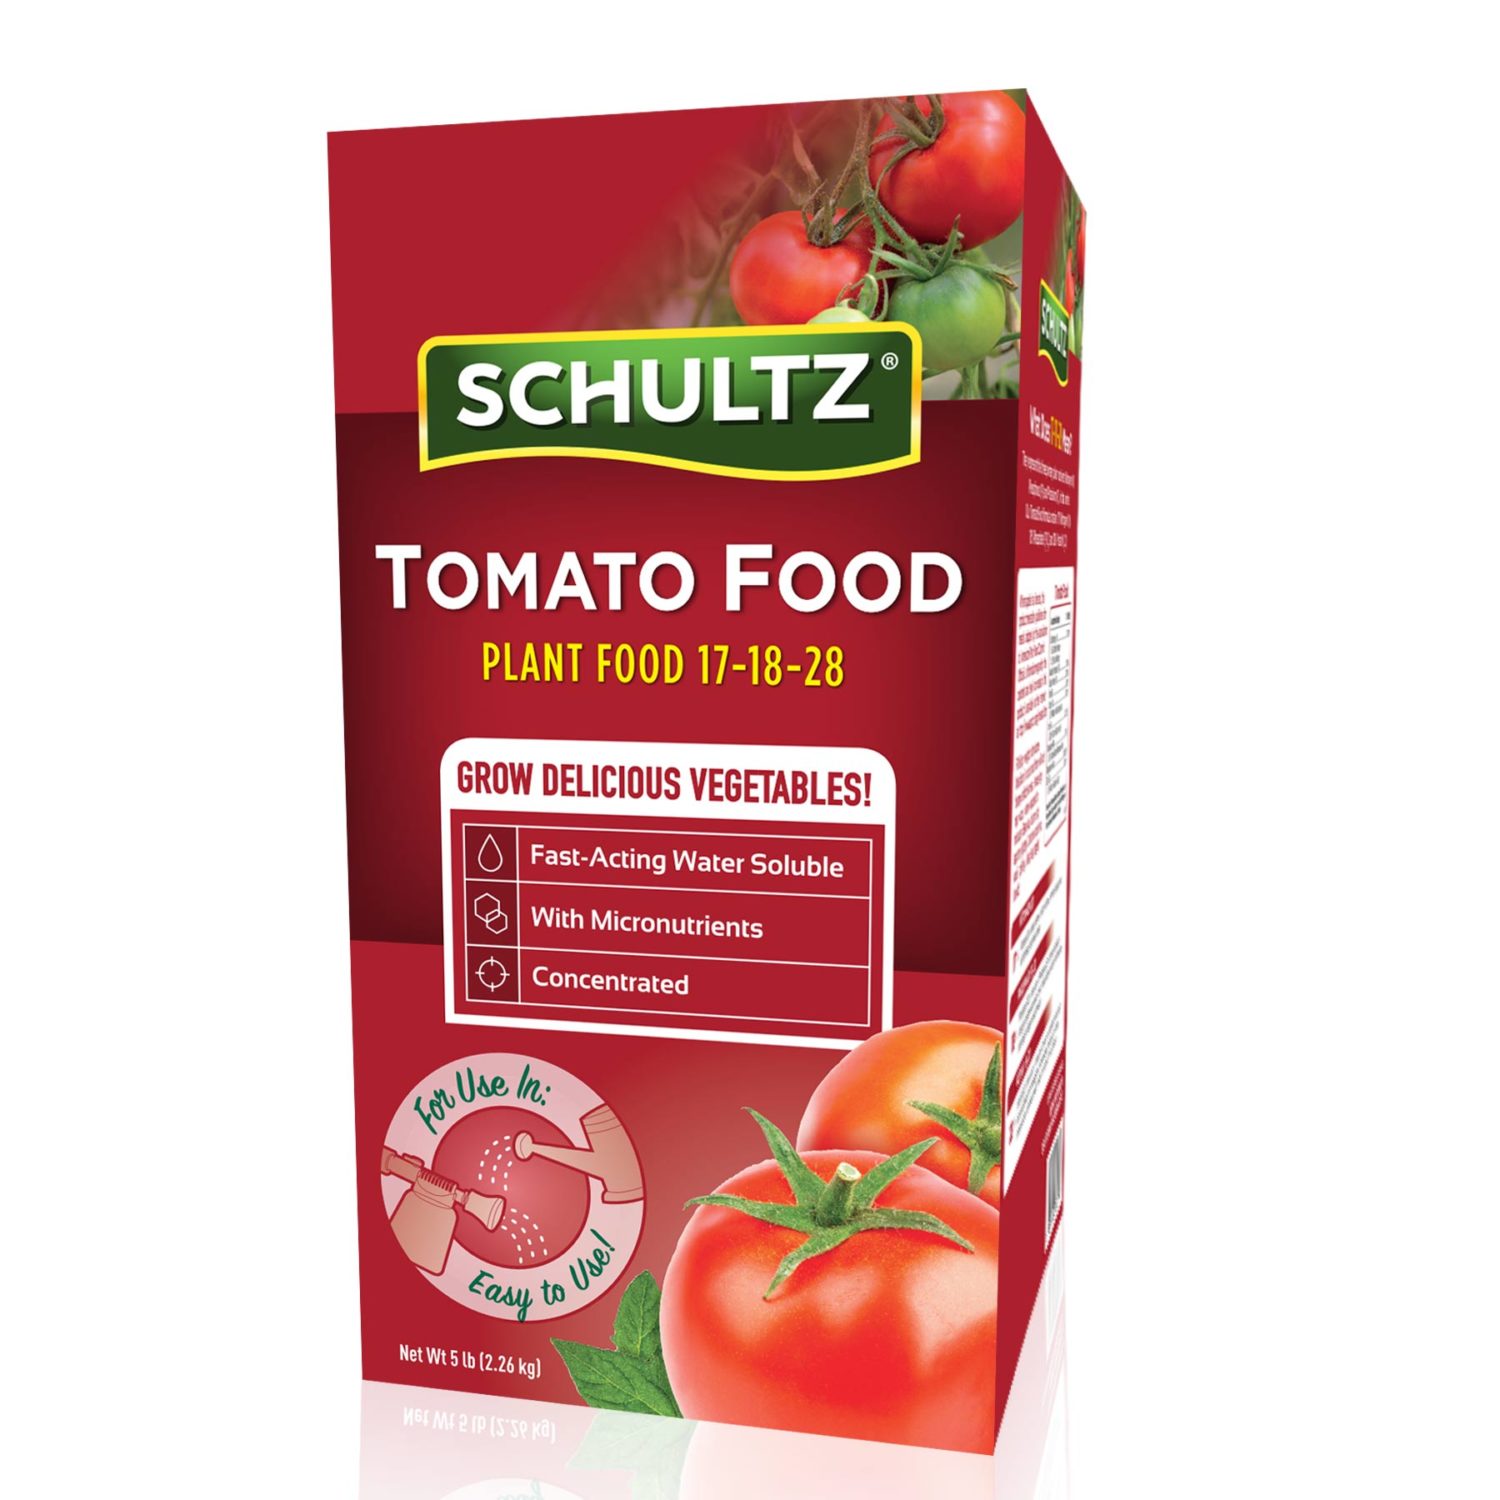 KNOX SCHULTZ tomato food